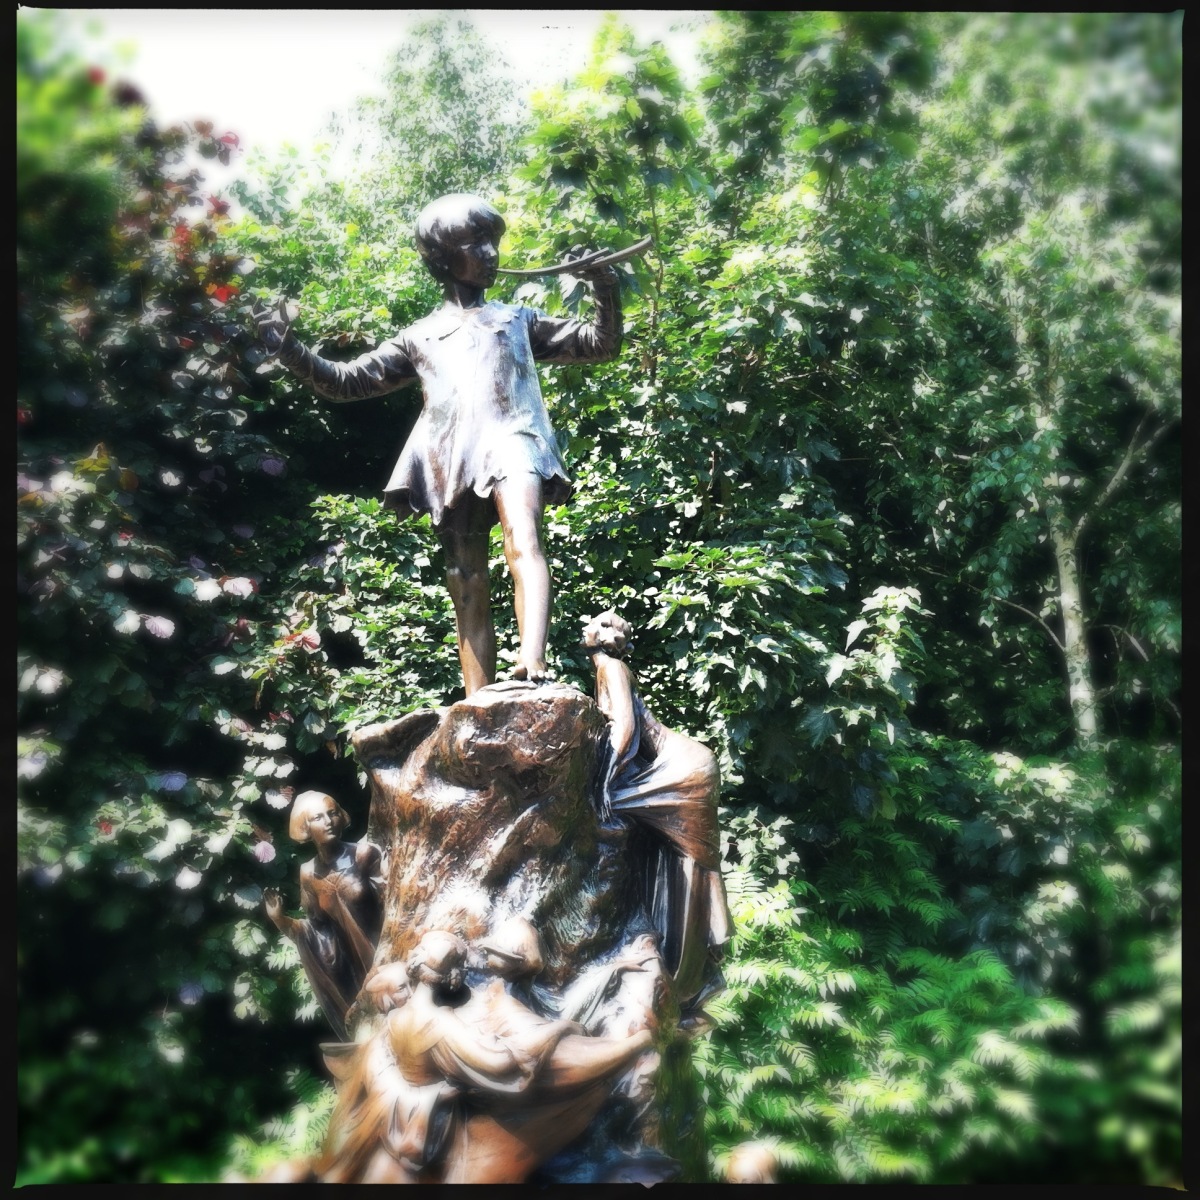 Kensington Gardens : Peter Pan statue